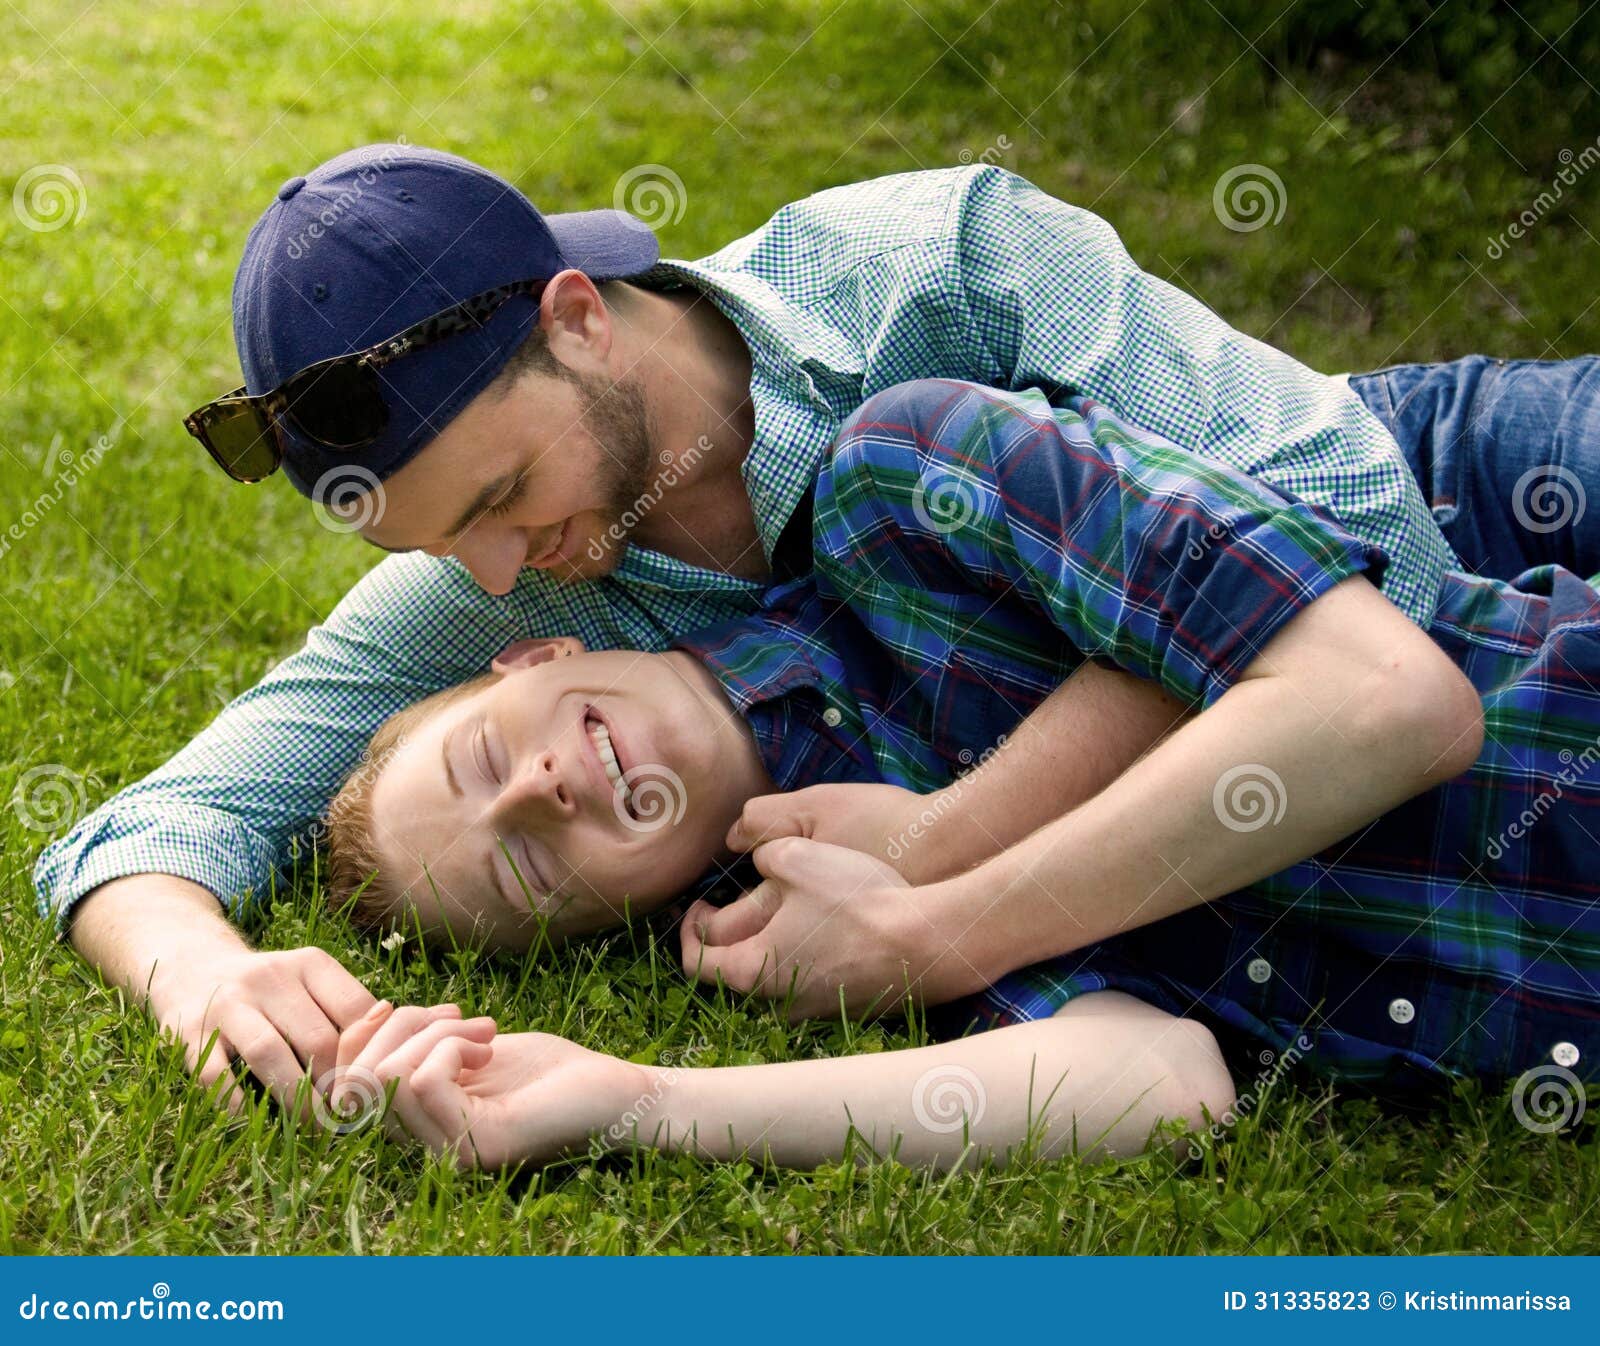 [Image: cuddling-couple-image-happy-gay-outdoors-31335823.jpg]